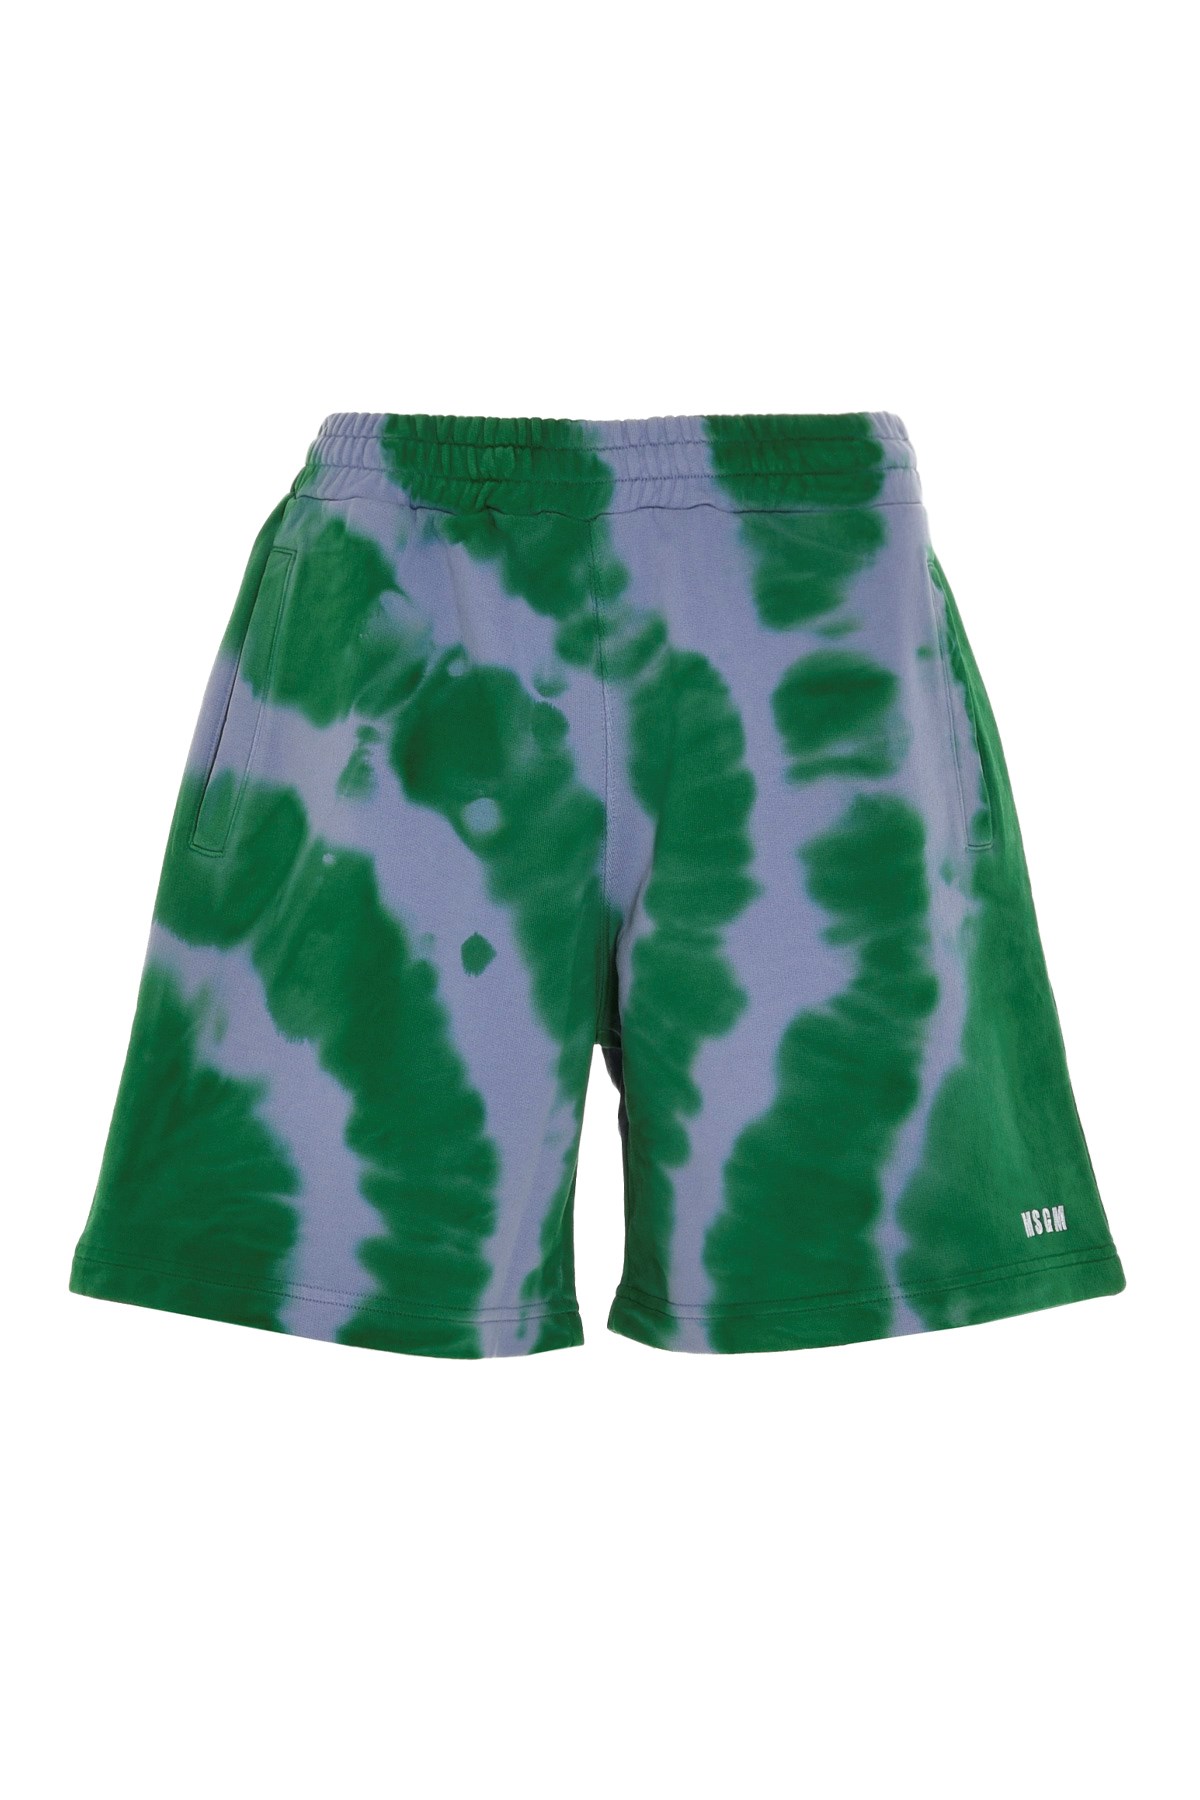 MSGM Tie-Dye Bermuda Shorts